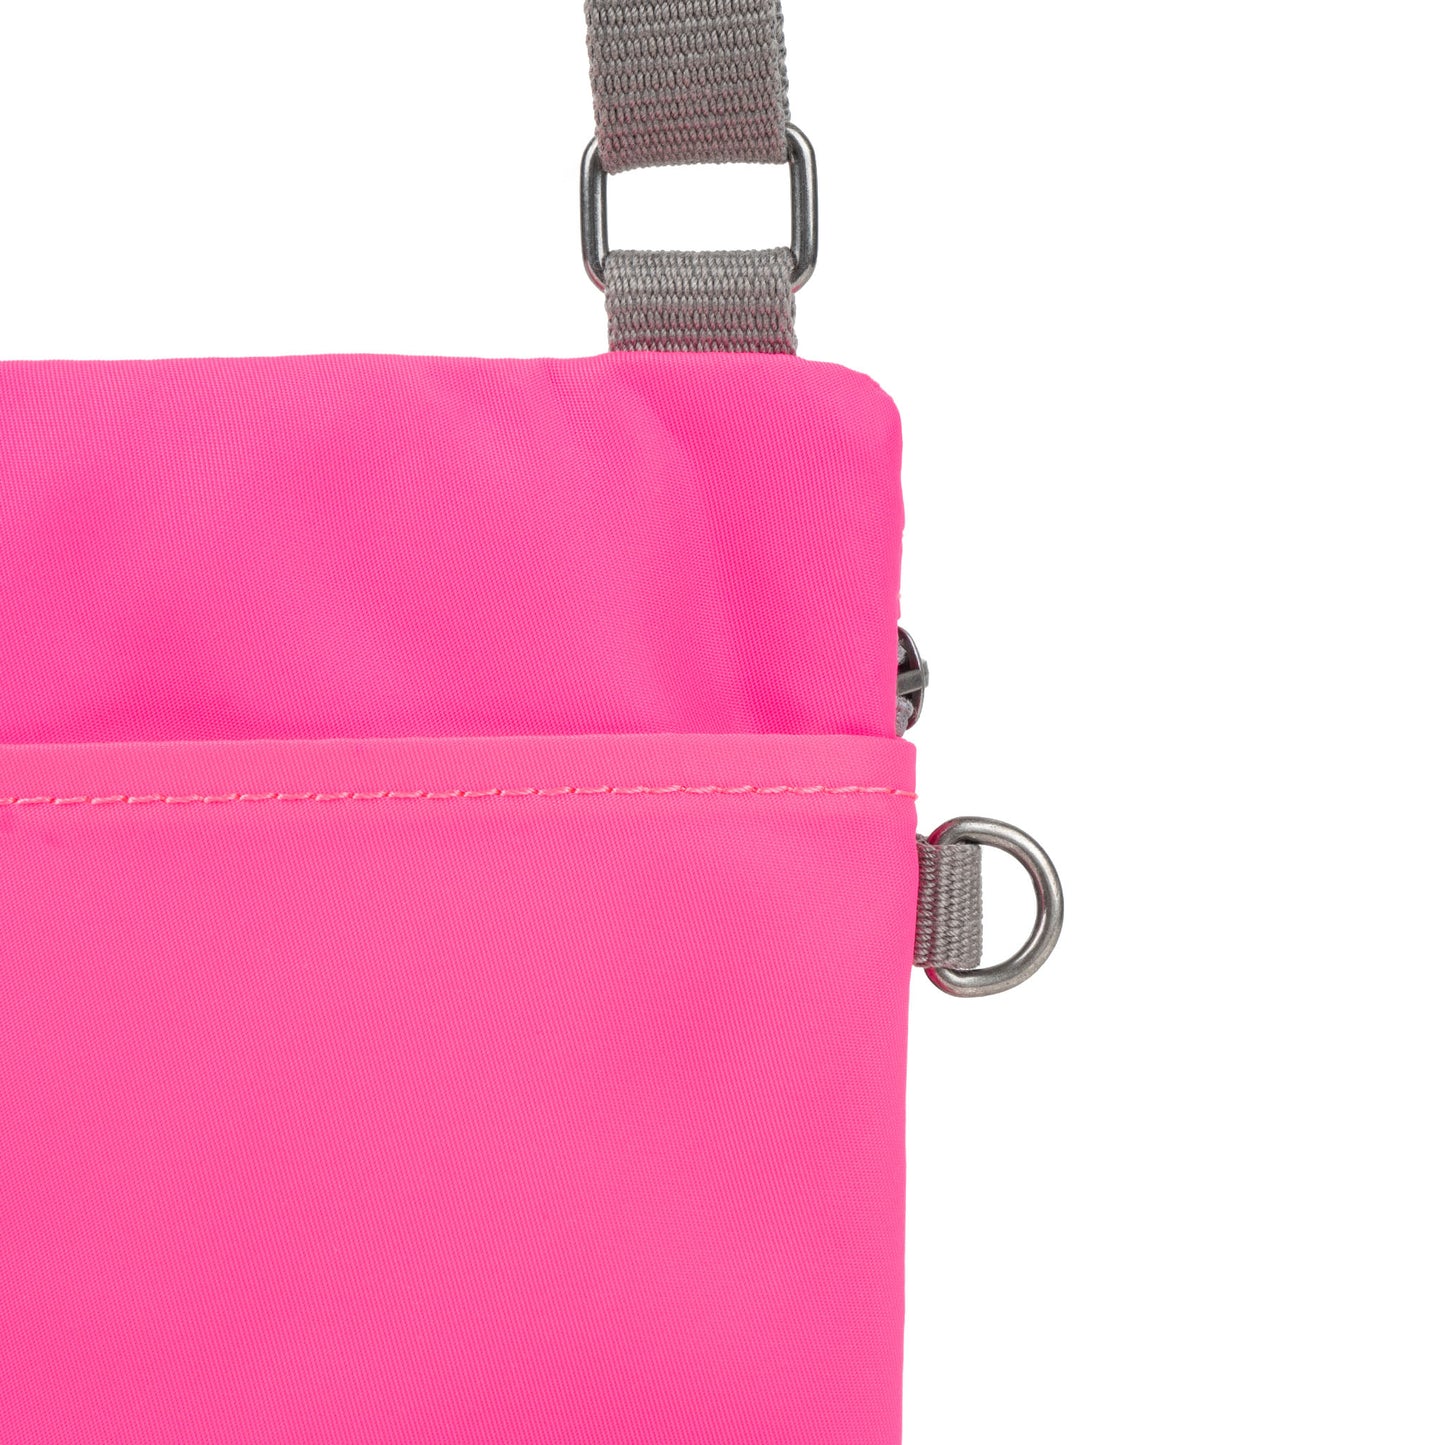 Roka London Chelsea Crossbody Phone Bag, Neon Pink (Recycled Nylon)